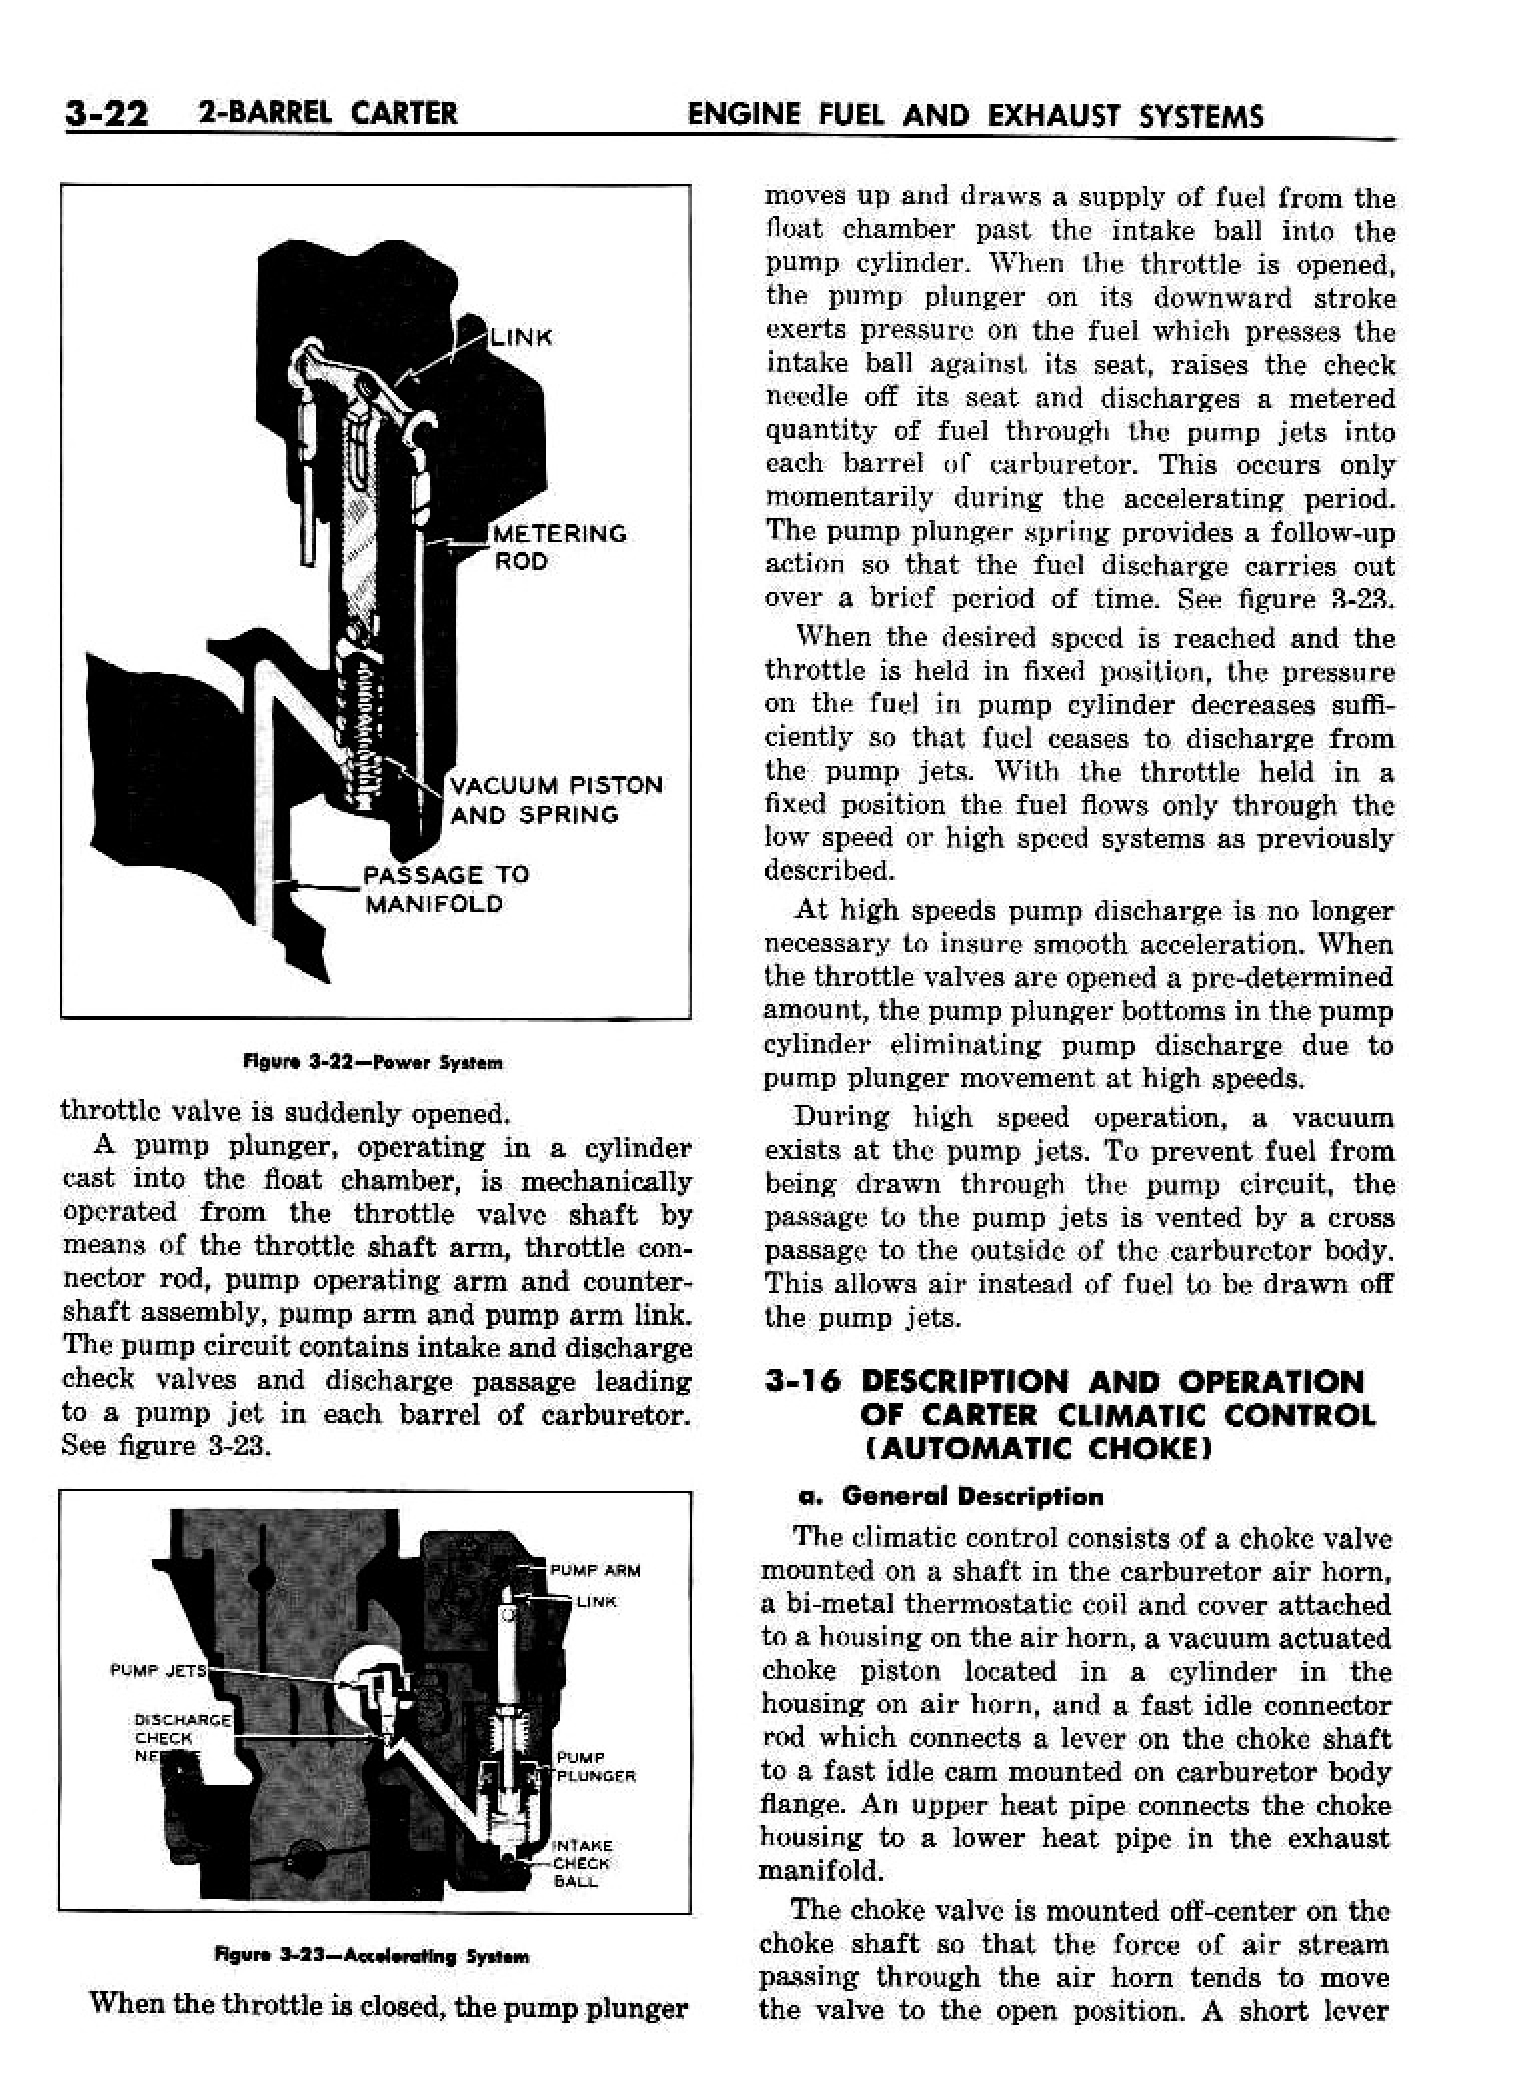 n_04 1958 Buick Shop Manual - Engine Fuel & Exhaust_22.jpg